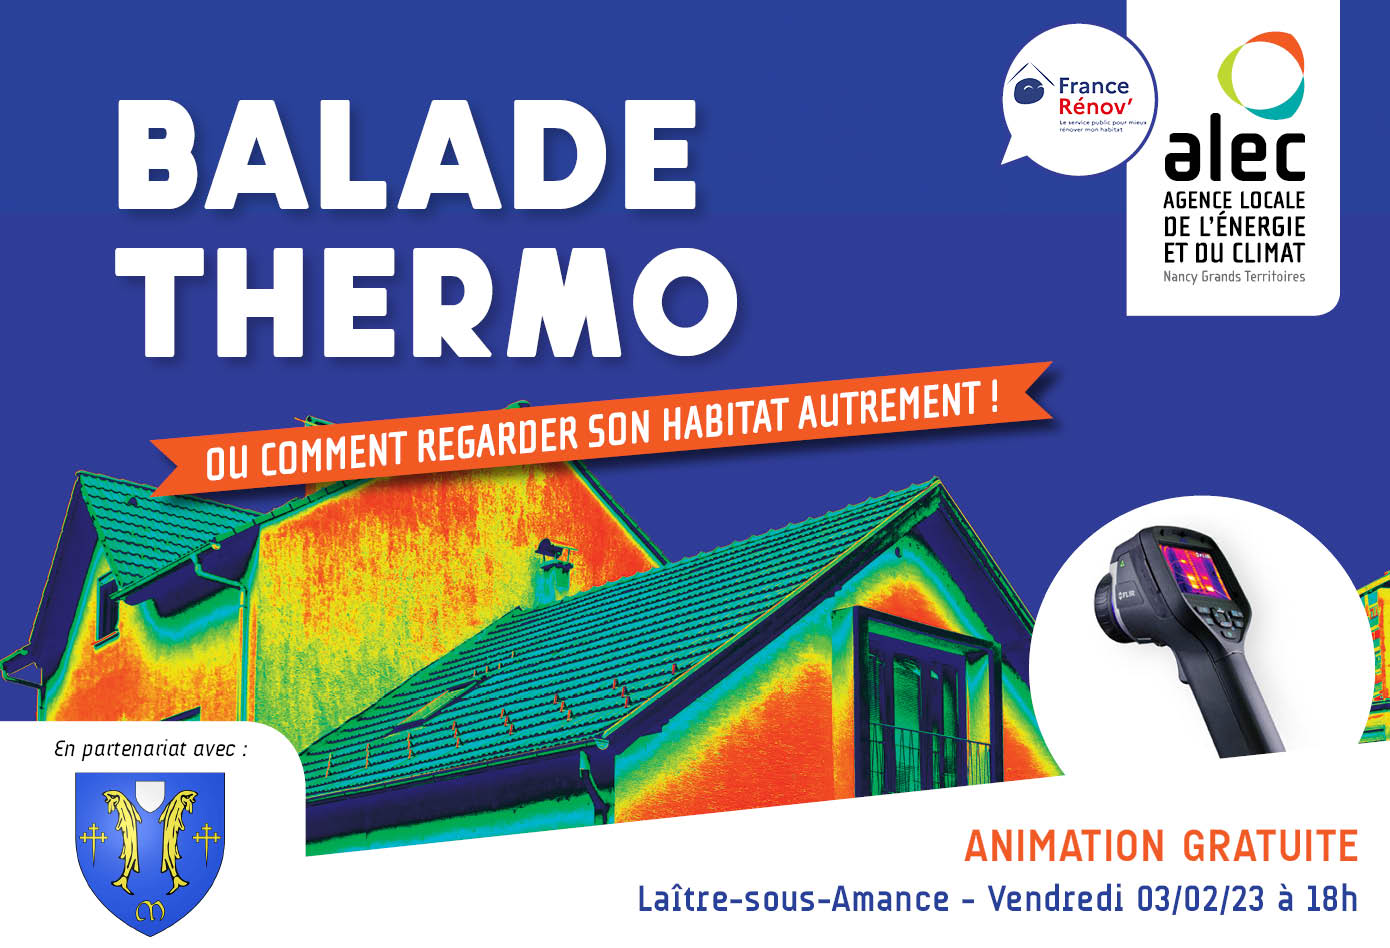 Balade thermo – Laître-sous-Amance